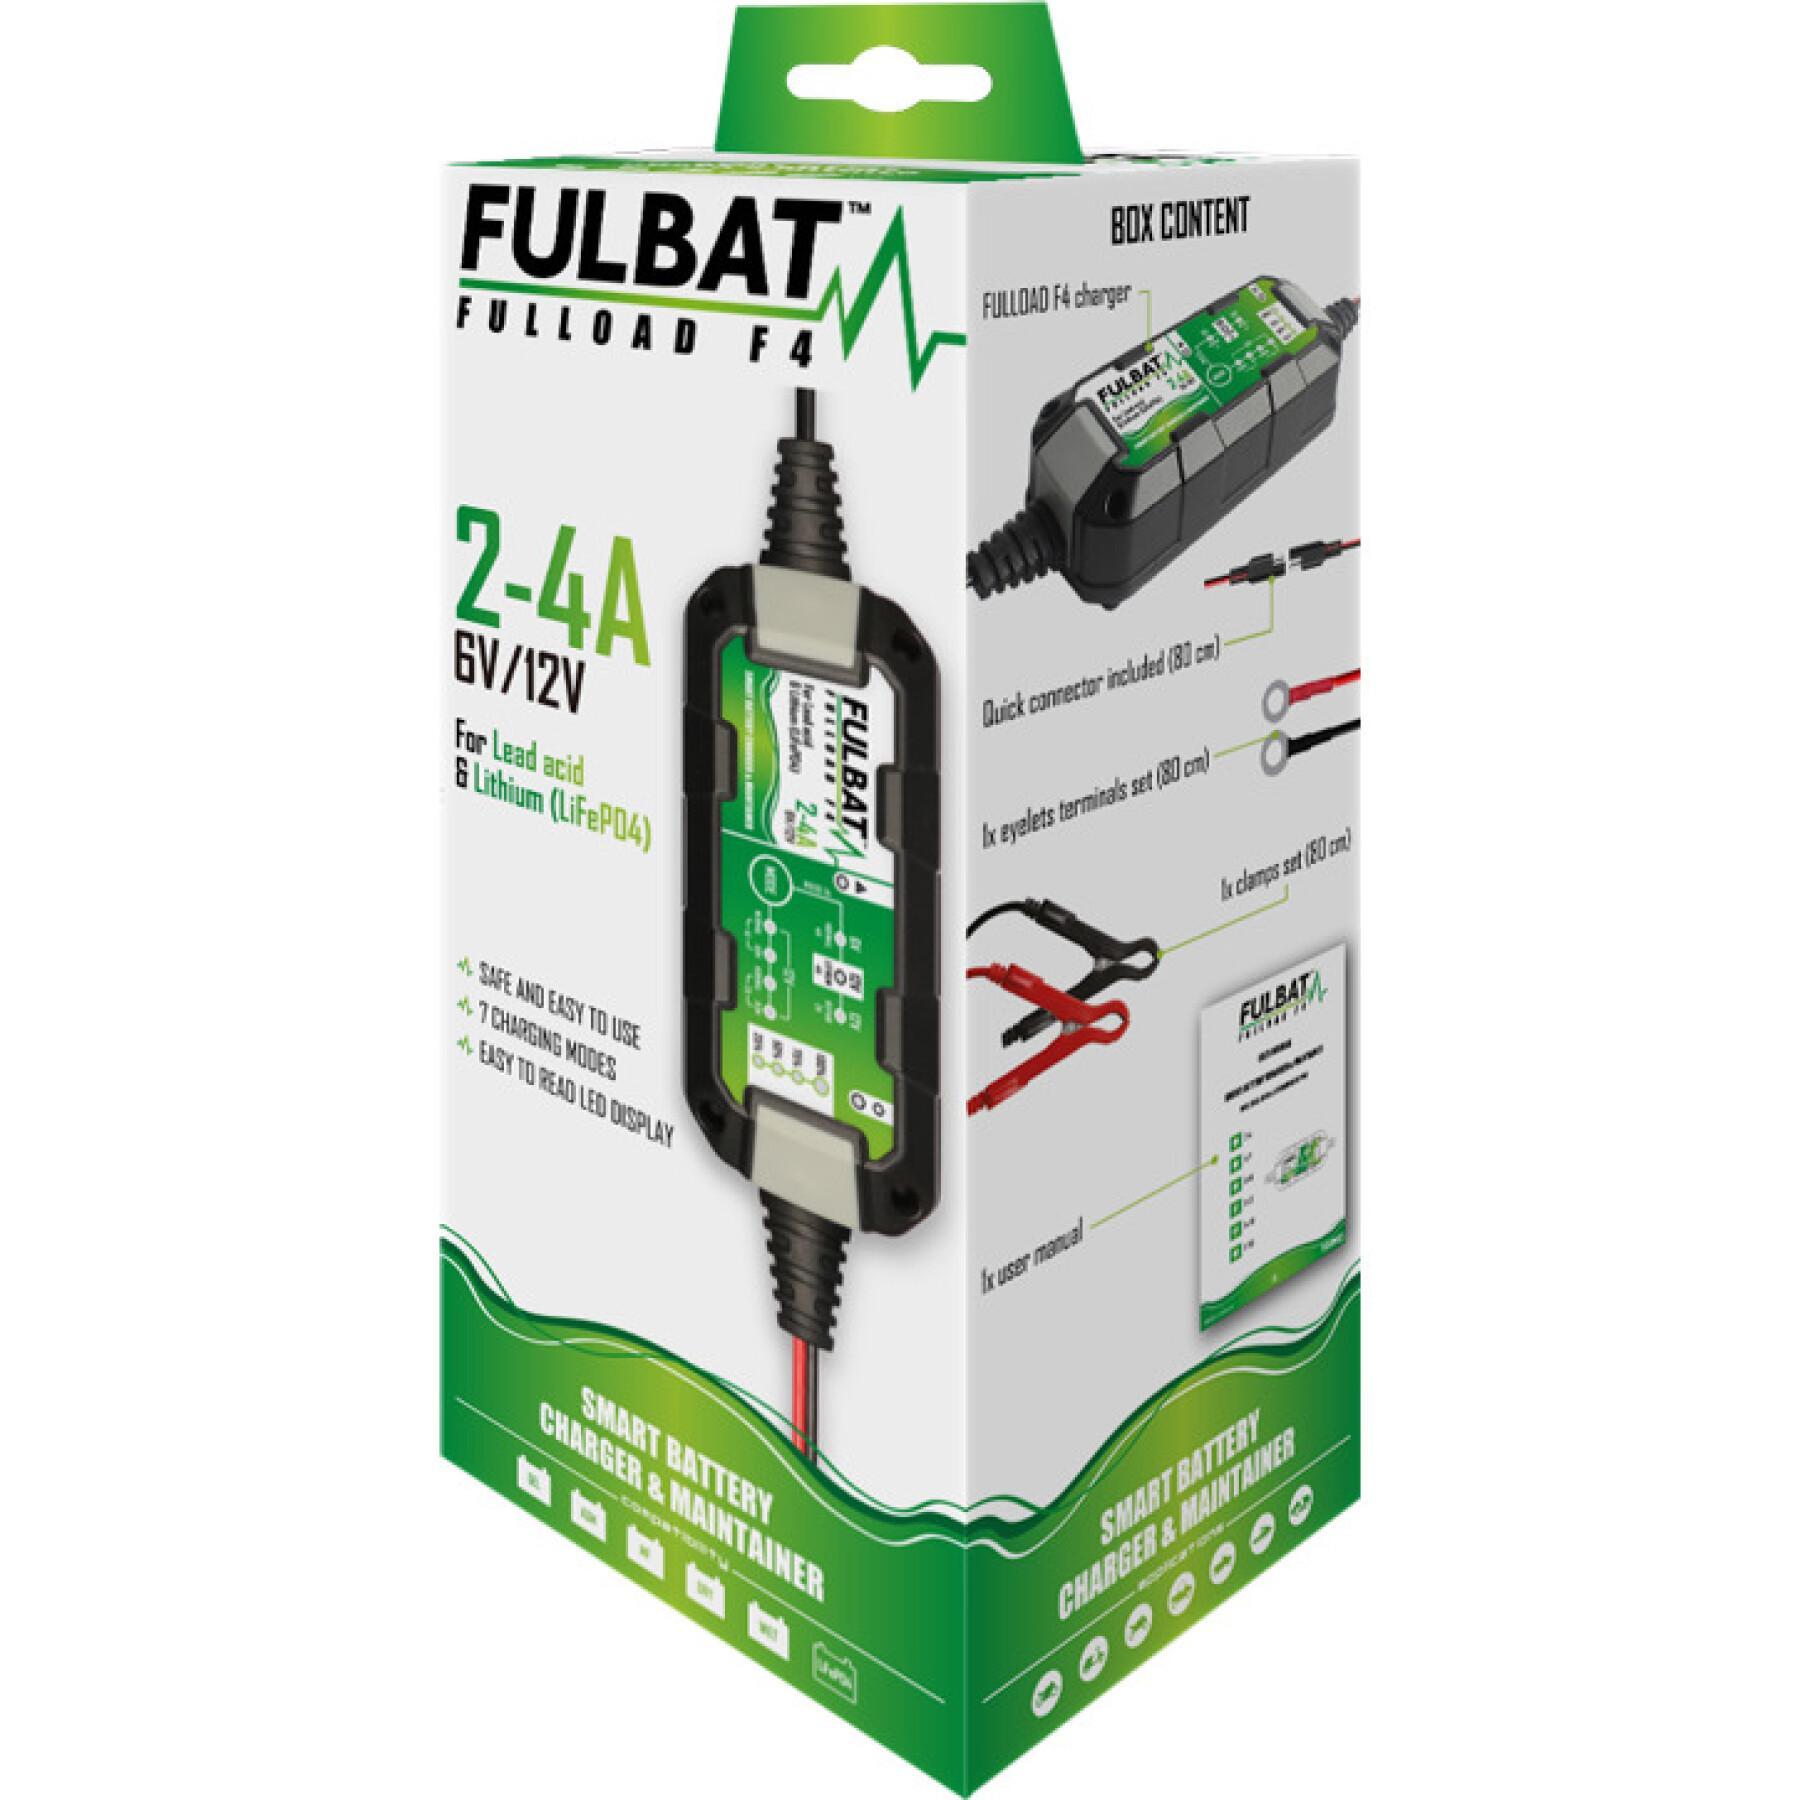 Batterieladegerät Fulbat Fulload F4